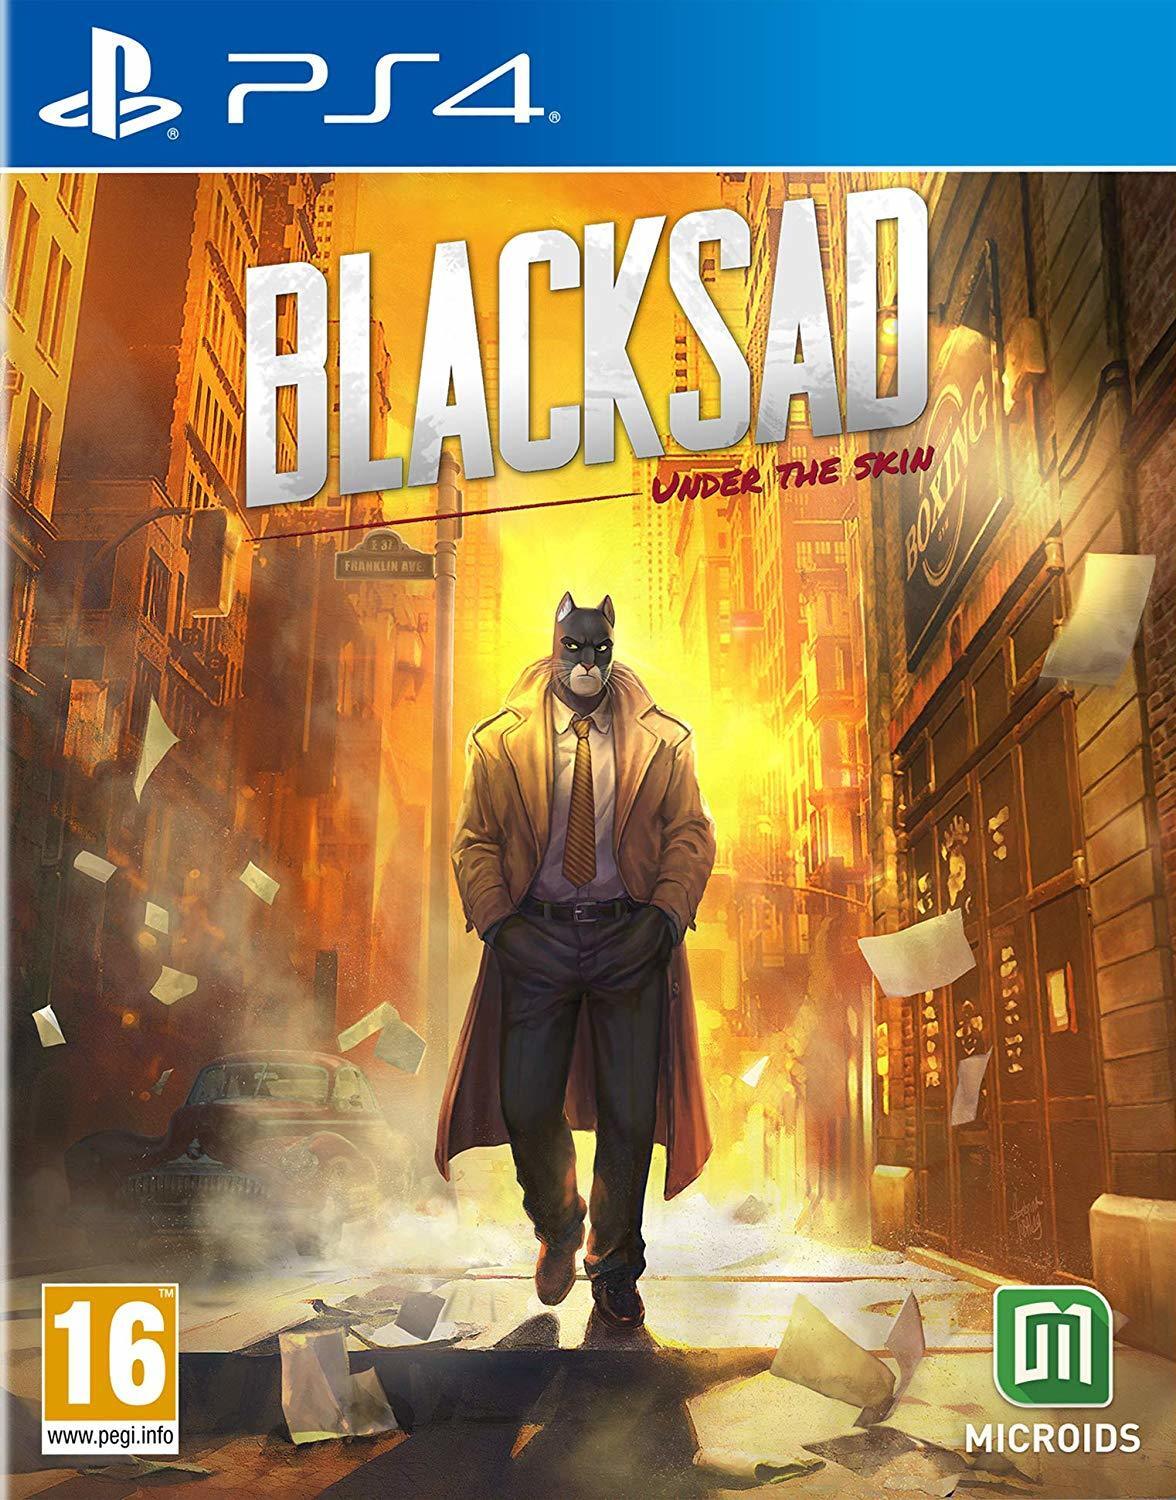 Microids Blacksad: Under The Skin Limited Edition NL/FR PS4 PlayStation 4